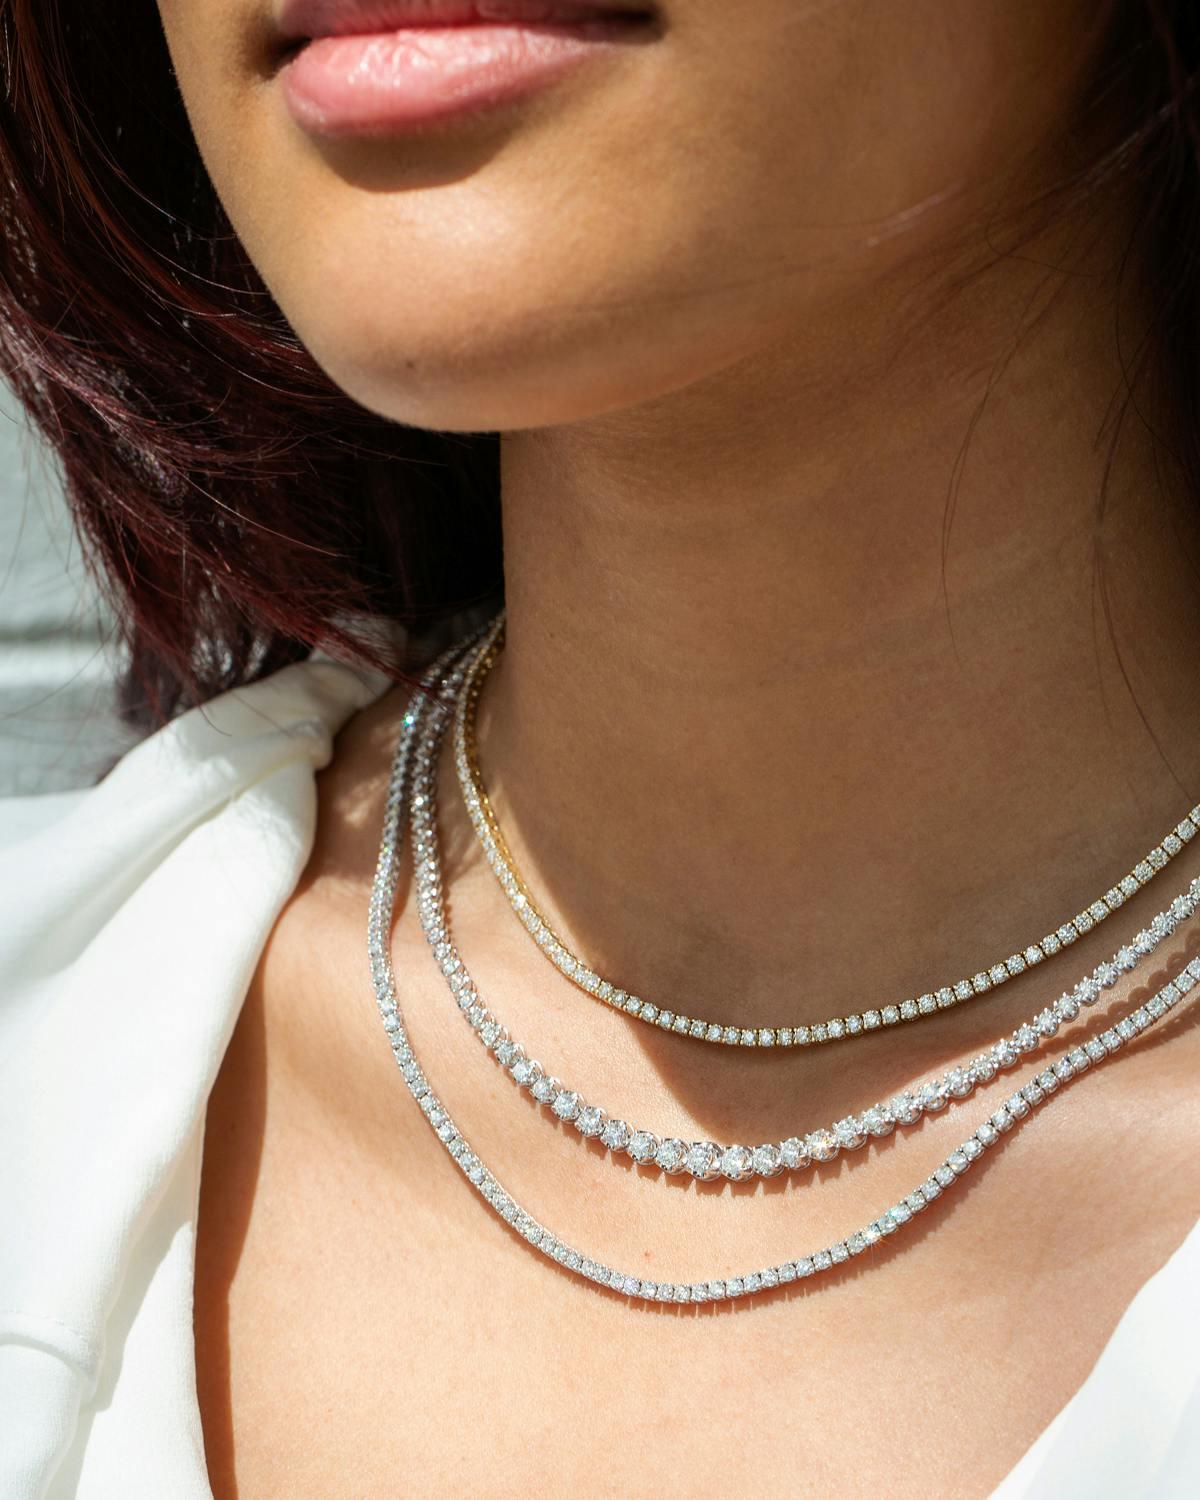 Three diamond necklaces on a woman's neck